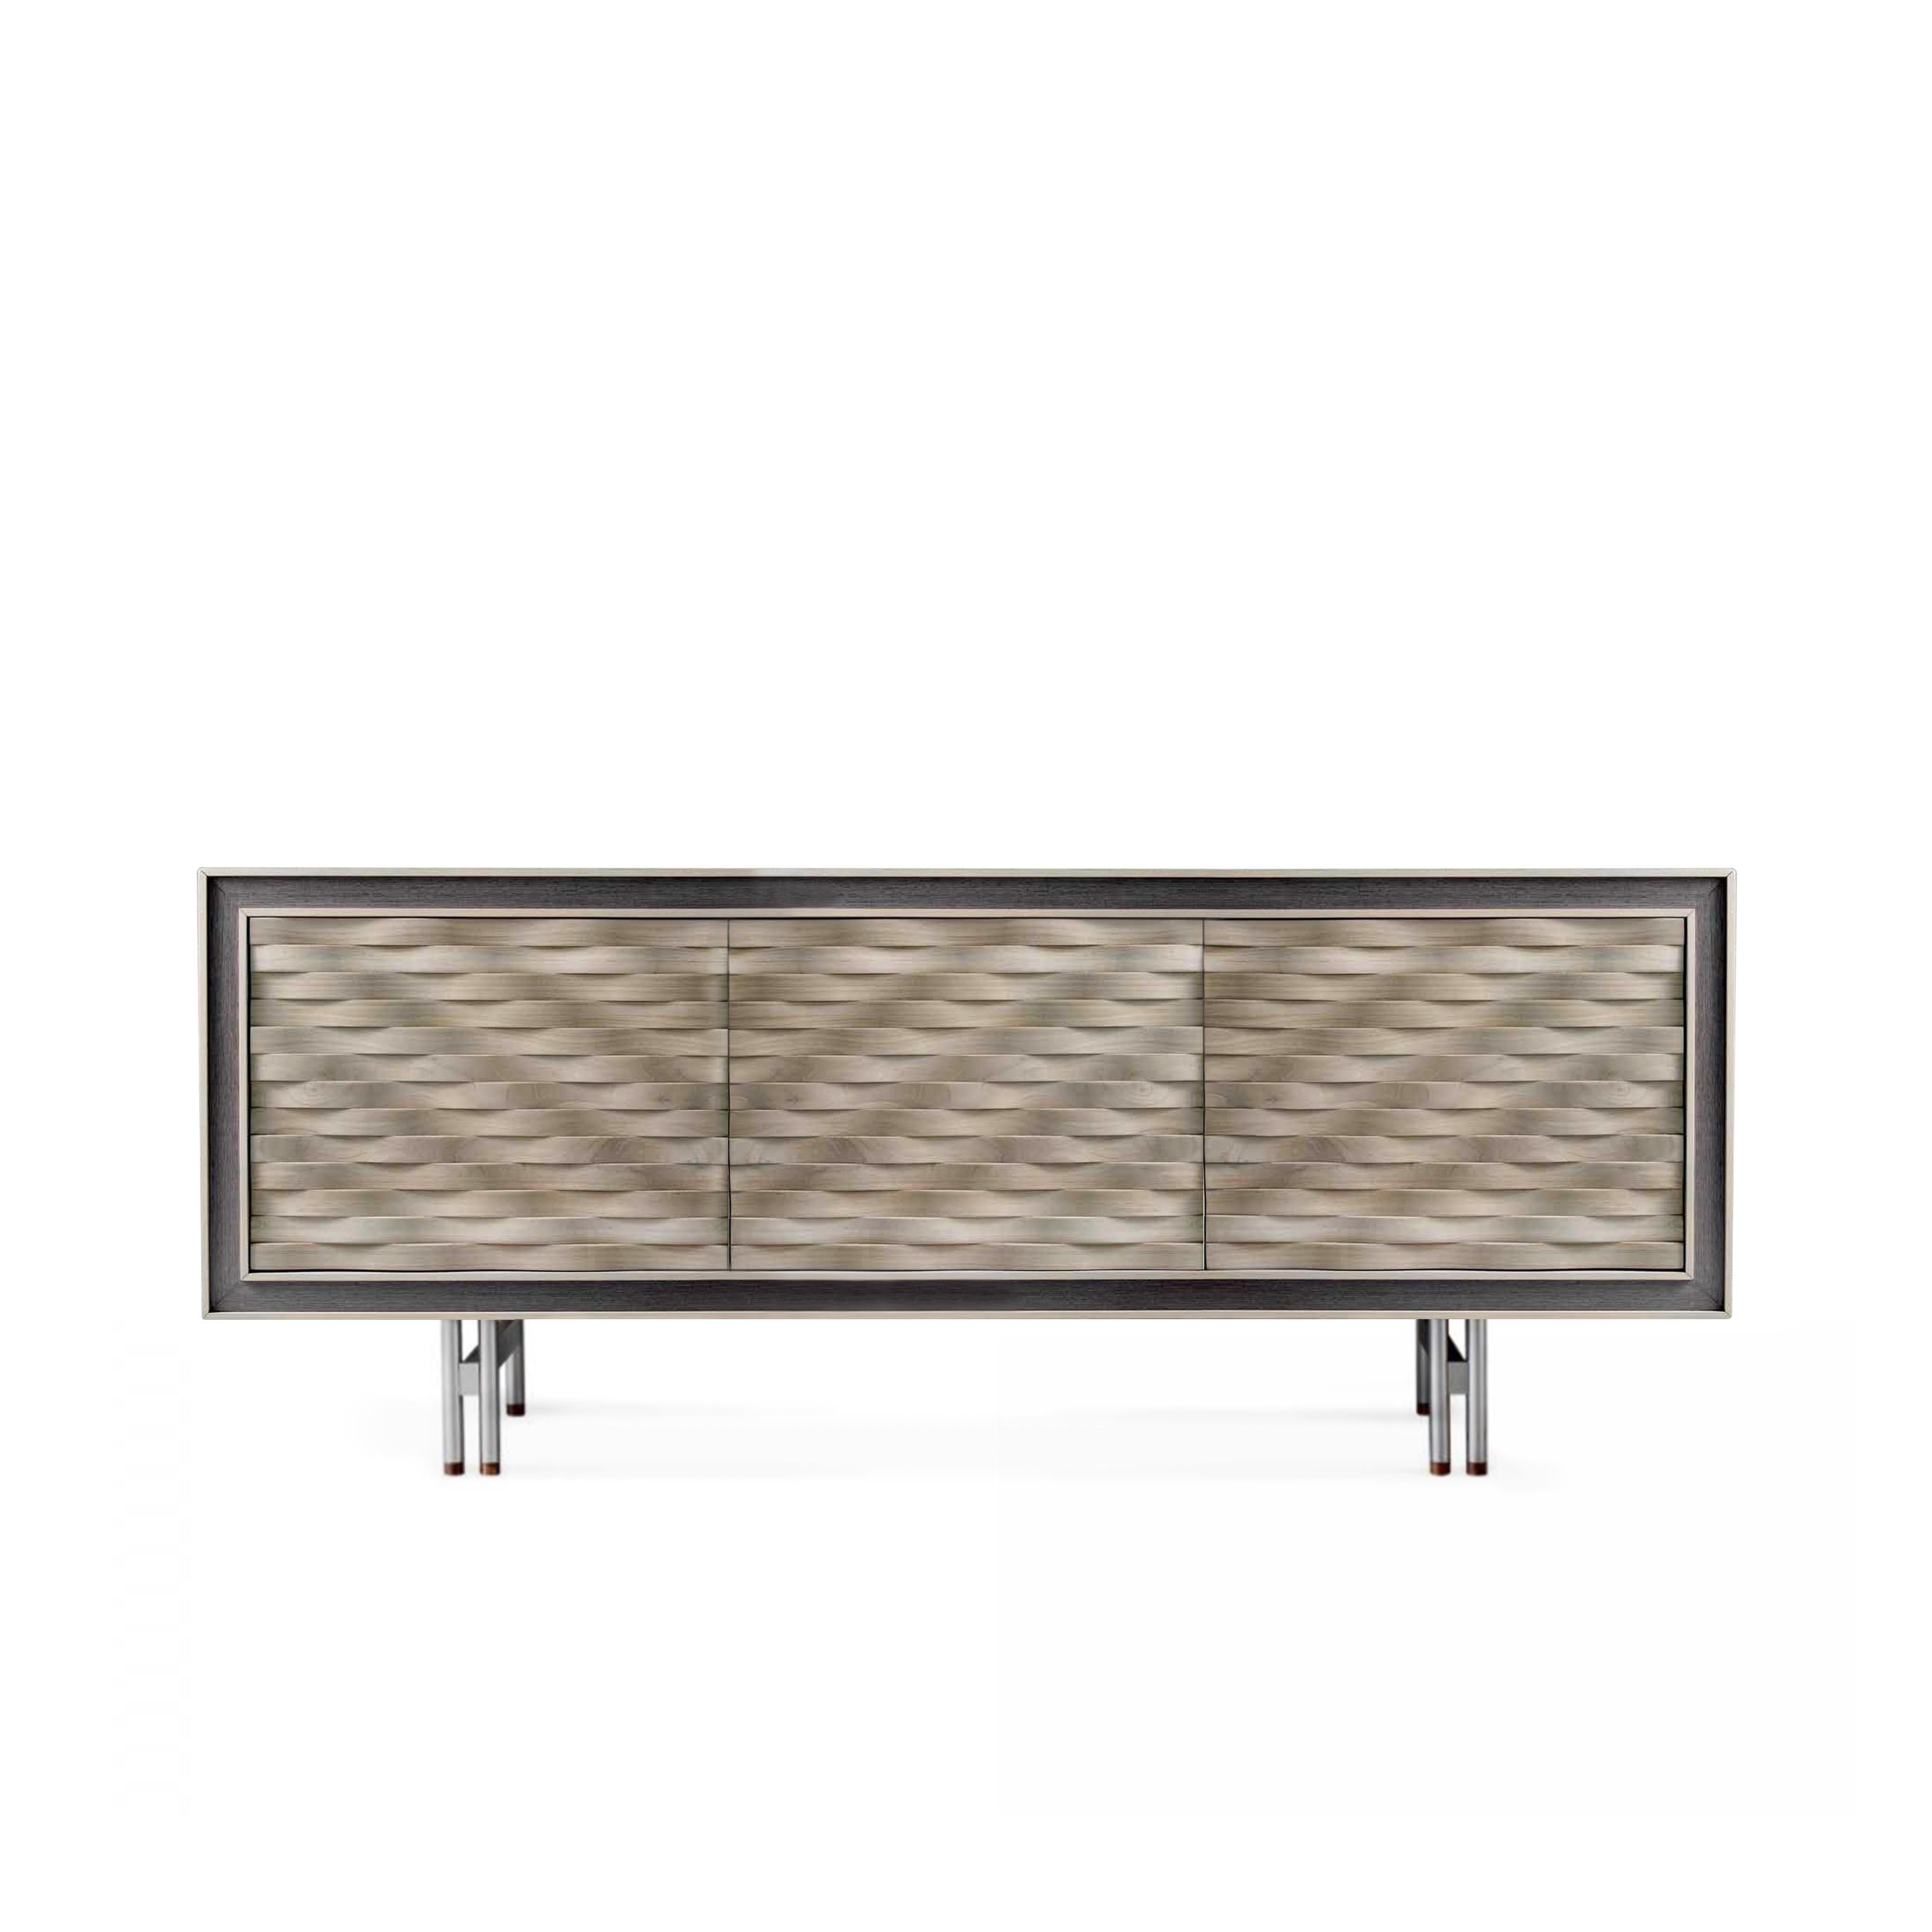 Quadra Nastro Solid Wood Sideboard, Walnut in Natural Grey Finish, Contemporary In New Condition For Sale In Cadeglioppi de Oppeano, VR